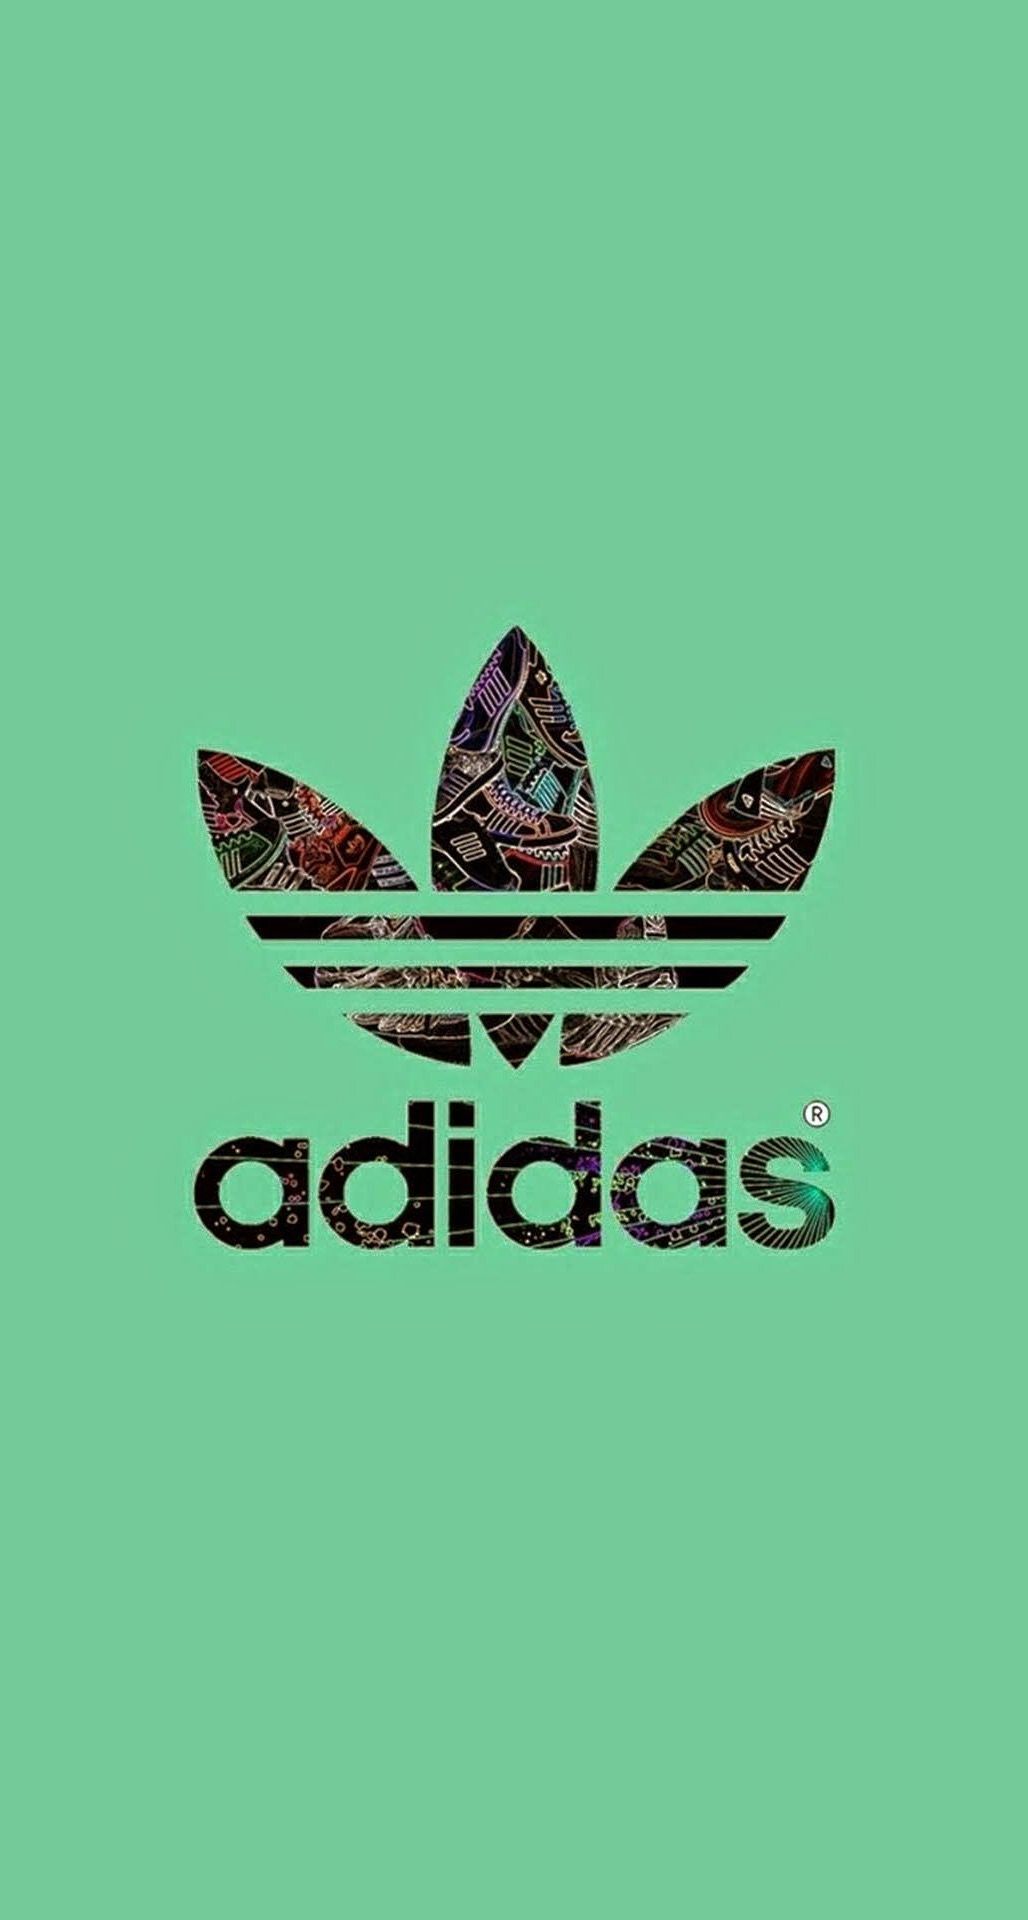 green adidas logo